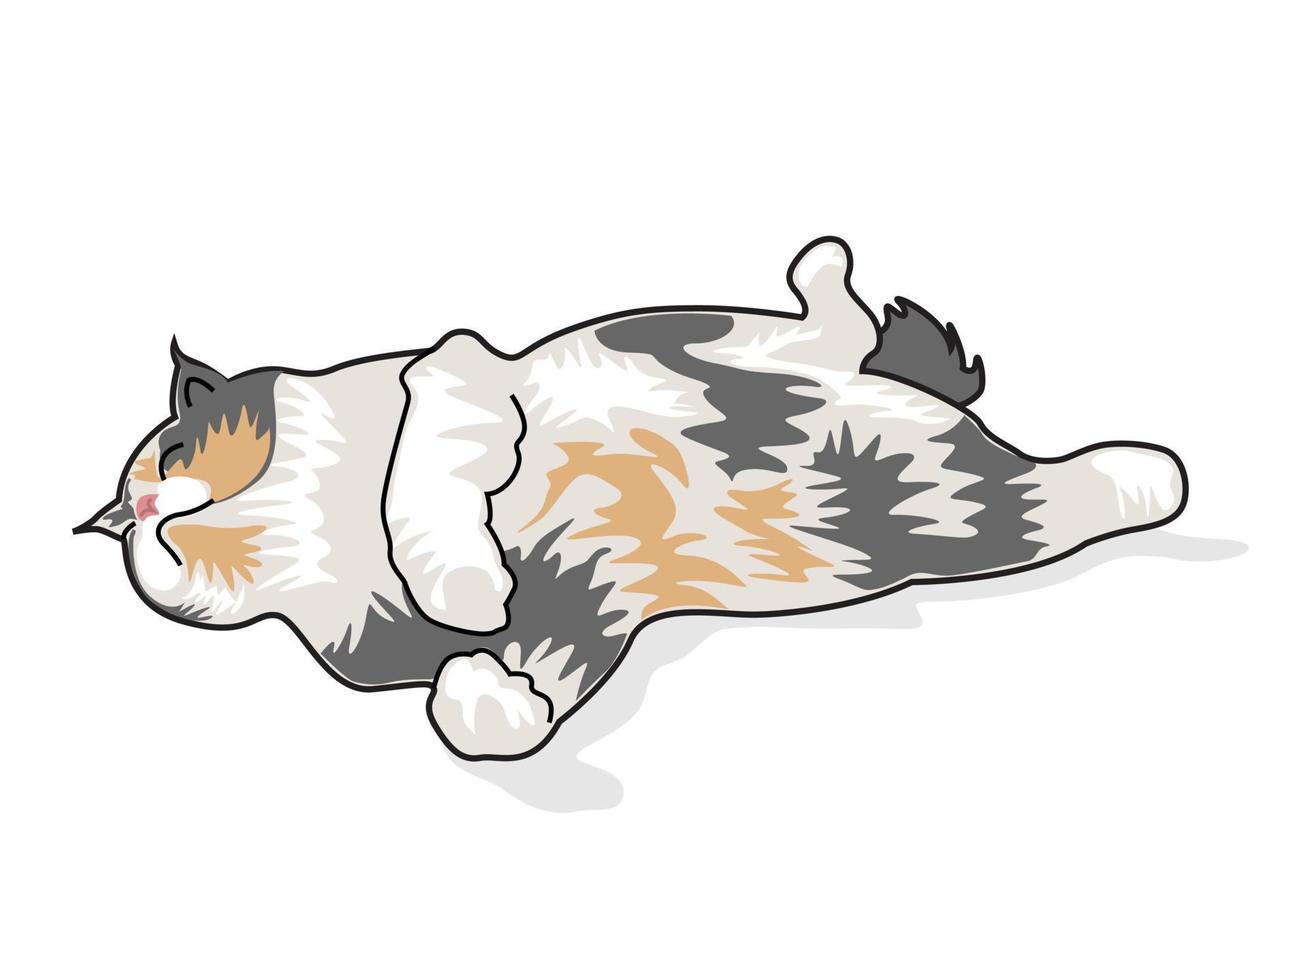 Cute Cat Catnaping illustration graphic vector